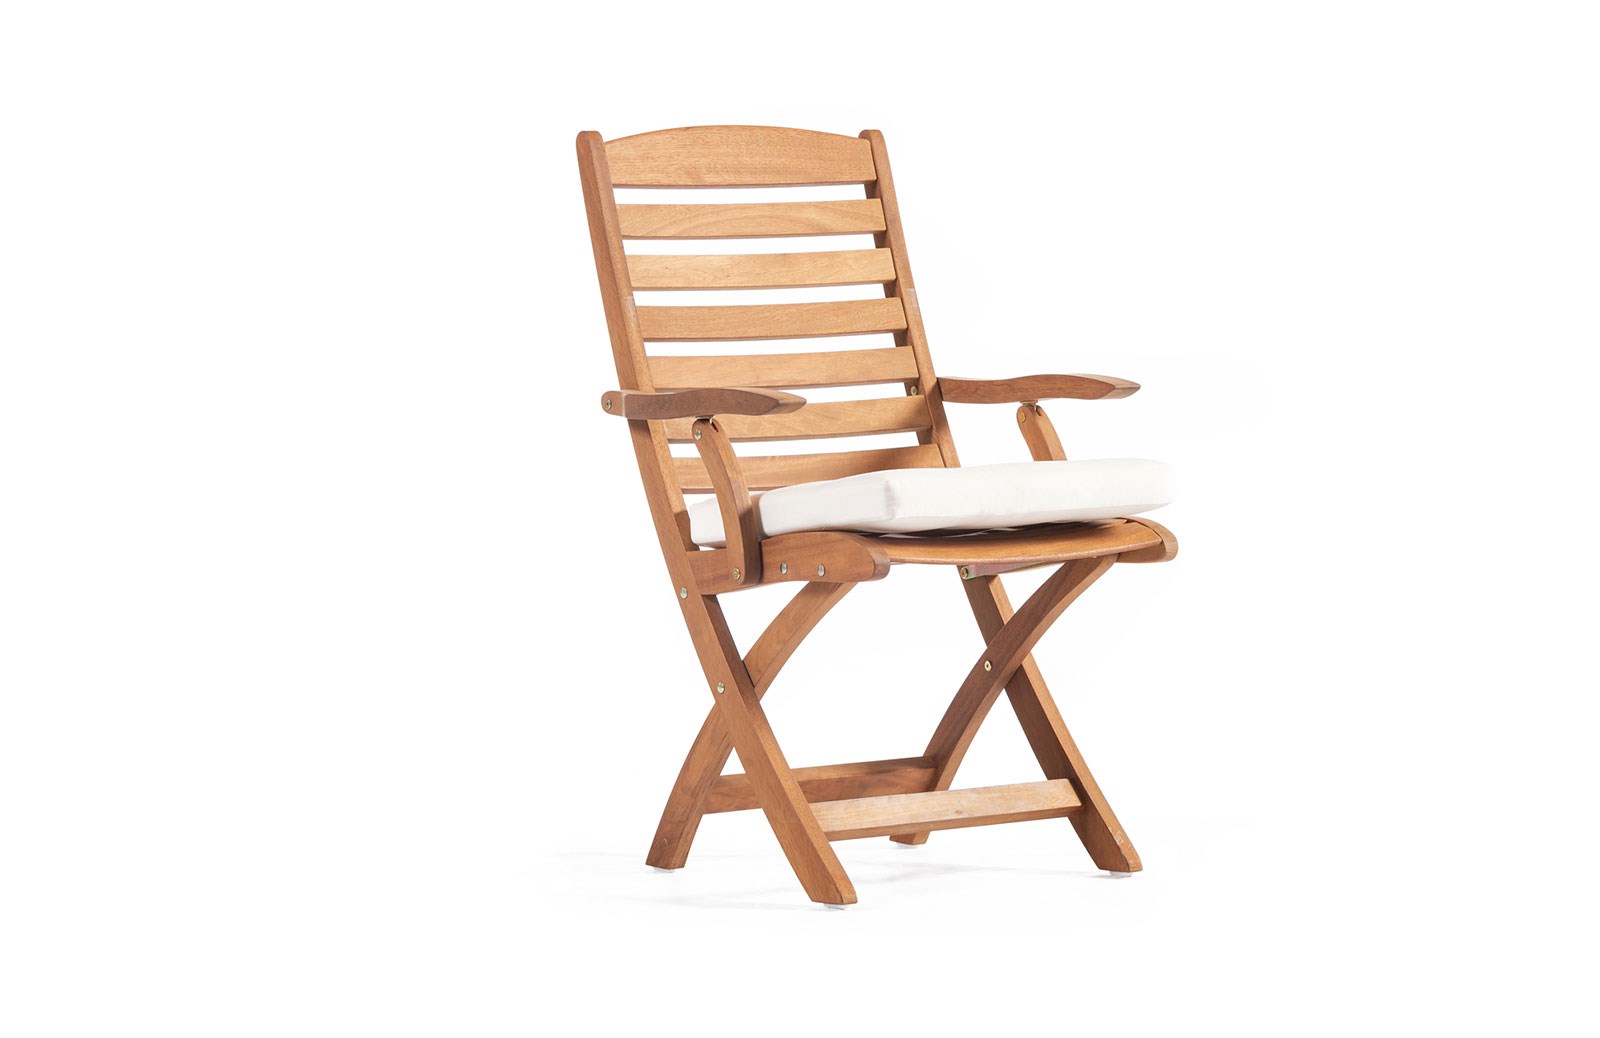 Ahşap Bahçe Sandalyesi Kollu Minderli 58 cm ER-1038Bahçe Sandalyesi